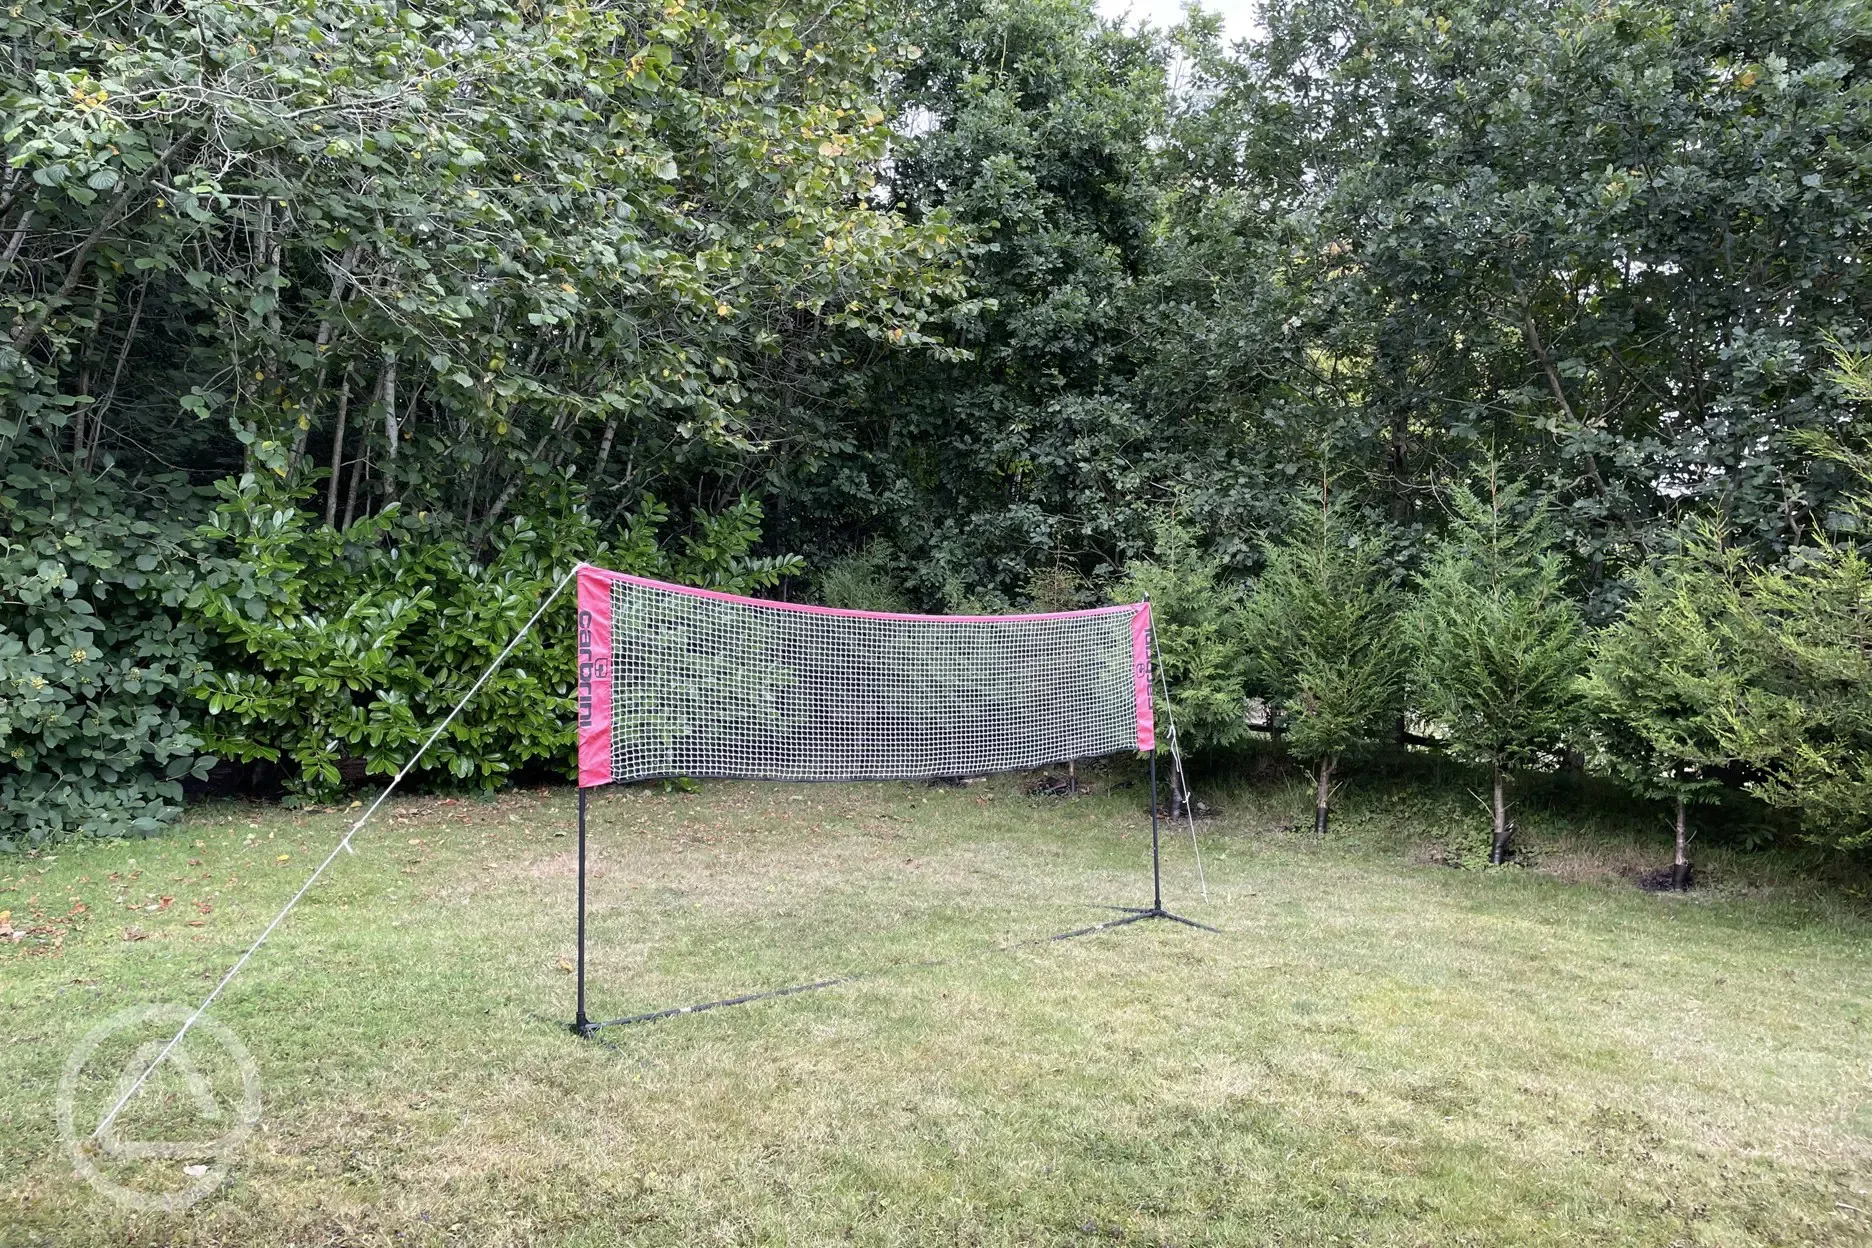 Badminton net provided in Summer